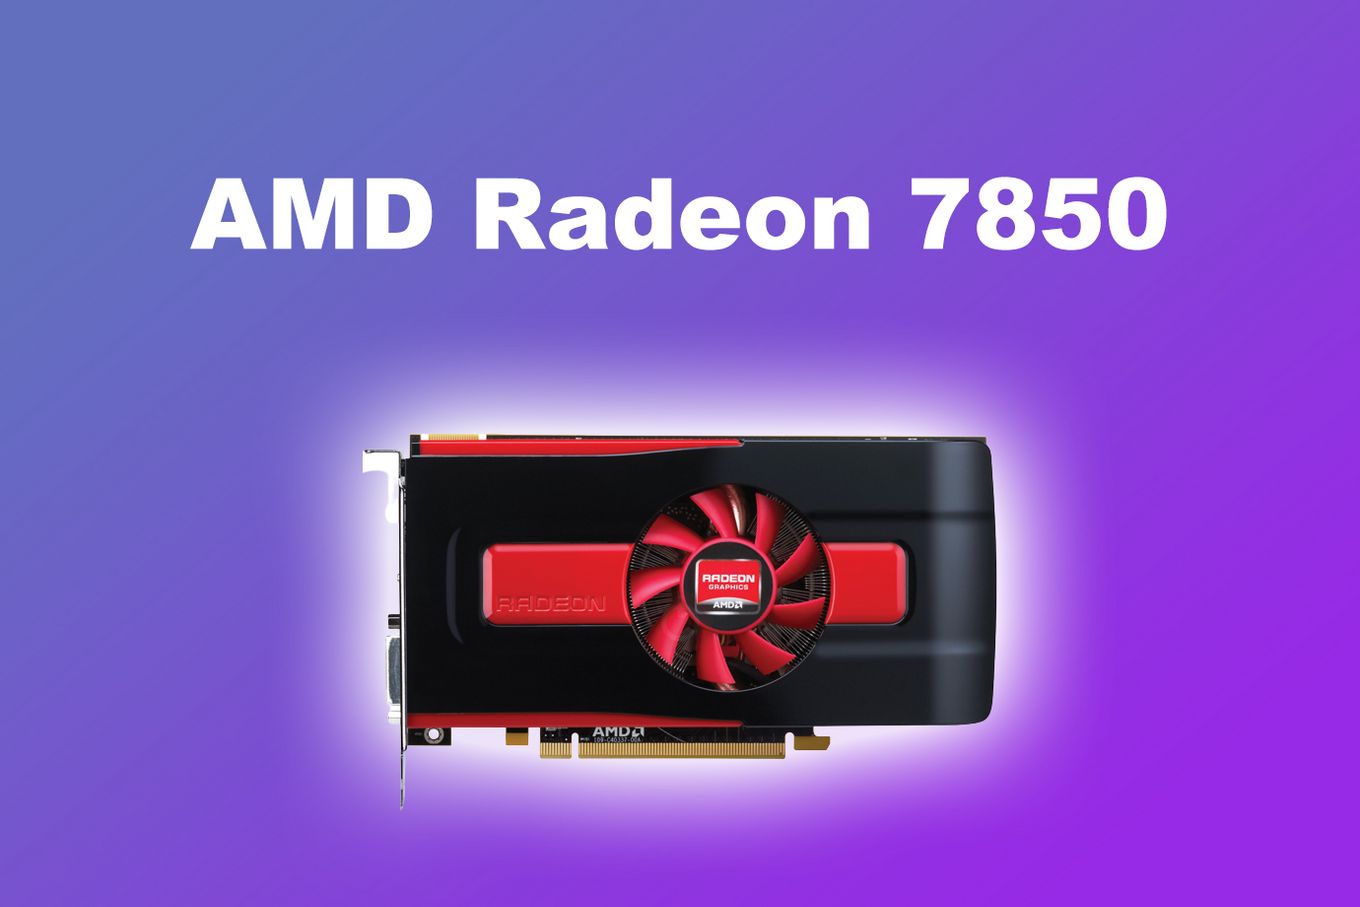 Radeon 7850 – PS4 graphics card equivalent